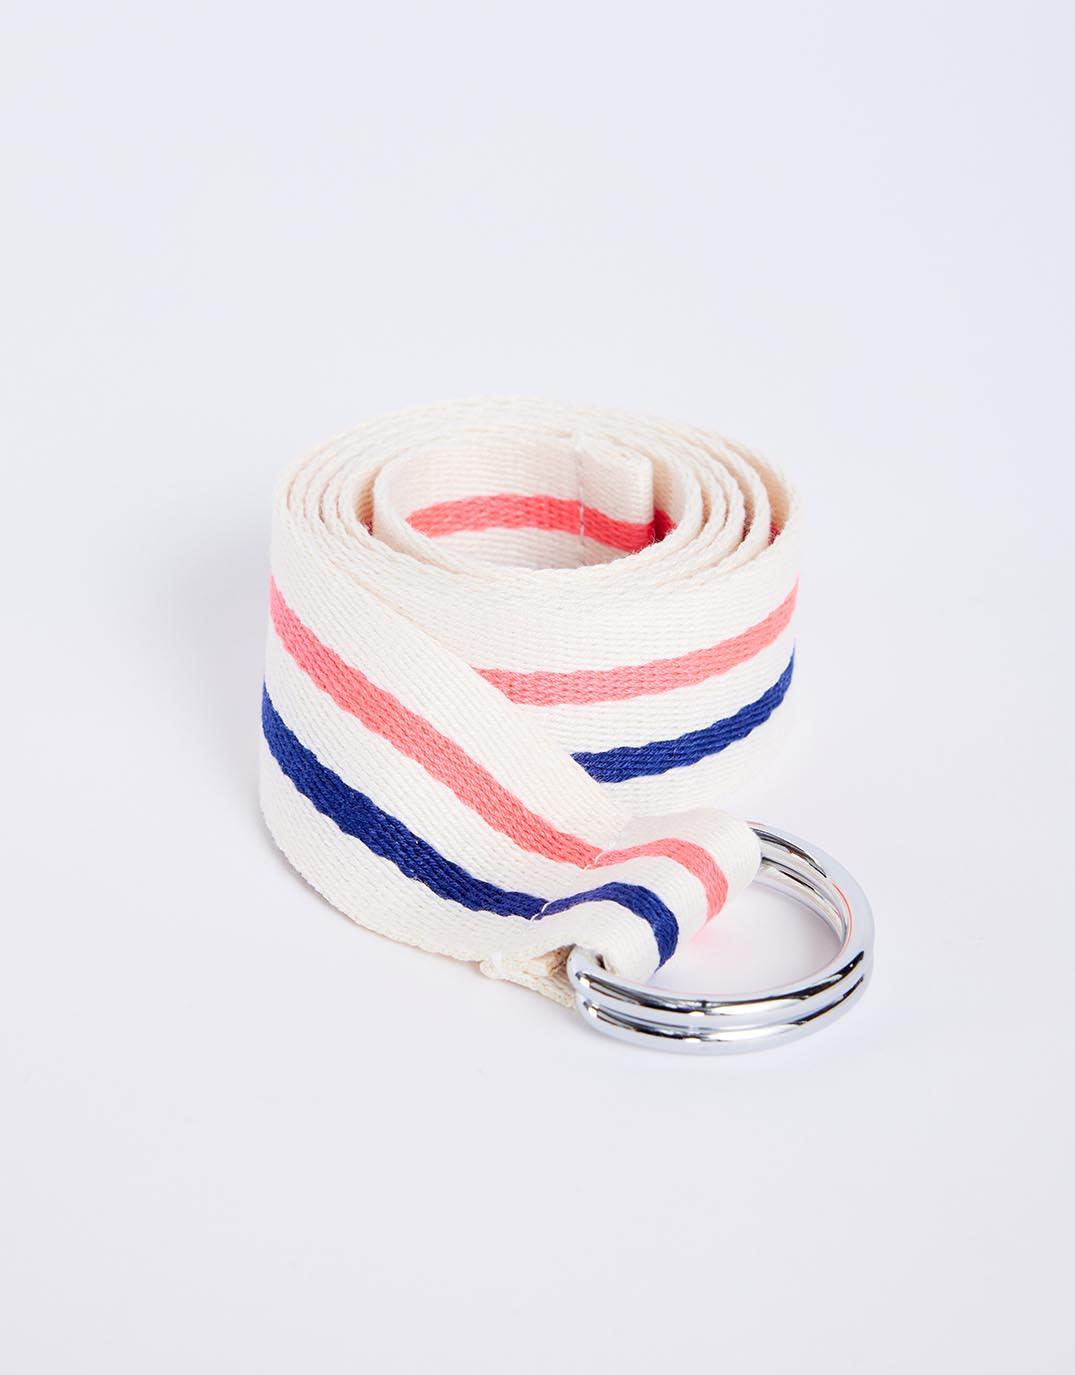 paulaglazebrook. - Portsea D-Ring Belt - Neon Pink/Navy Stripe - paulaglazebrook Accessories